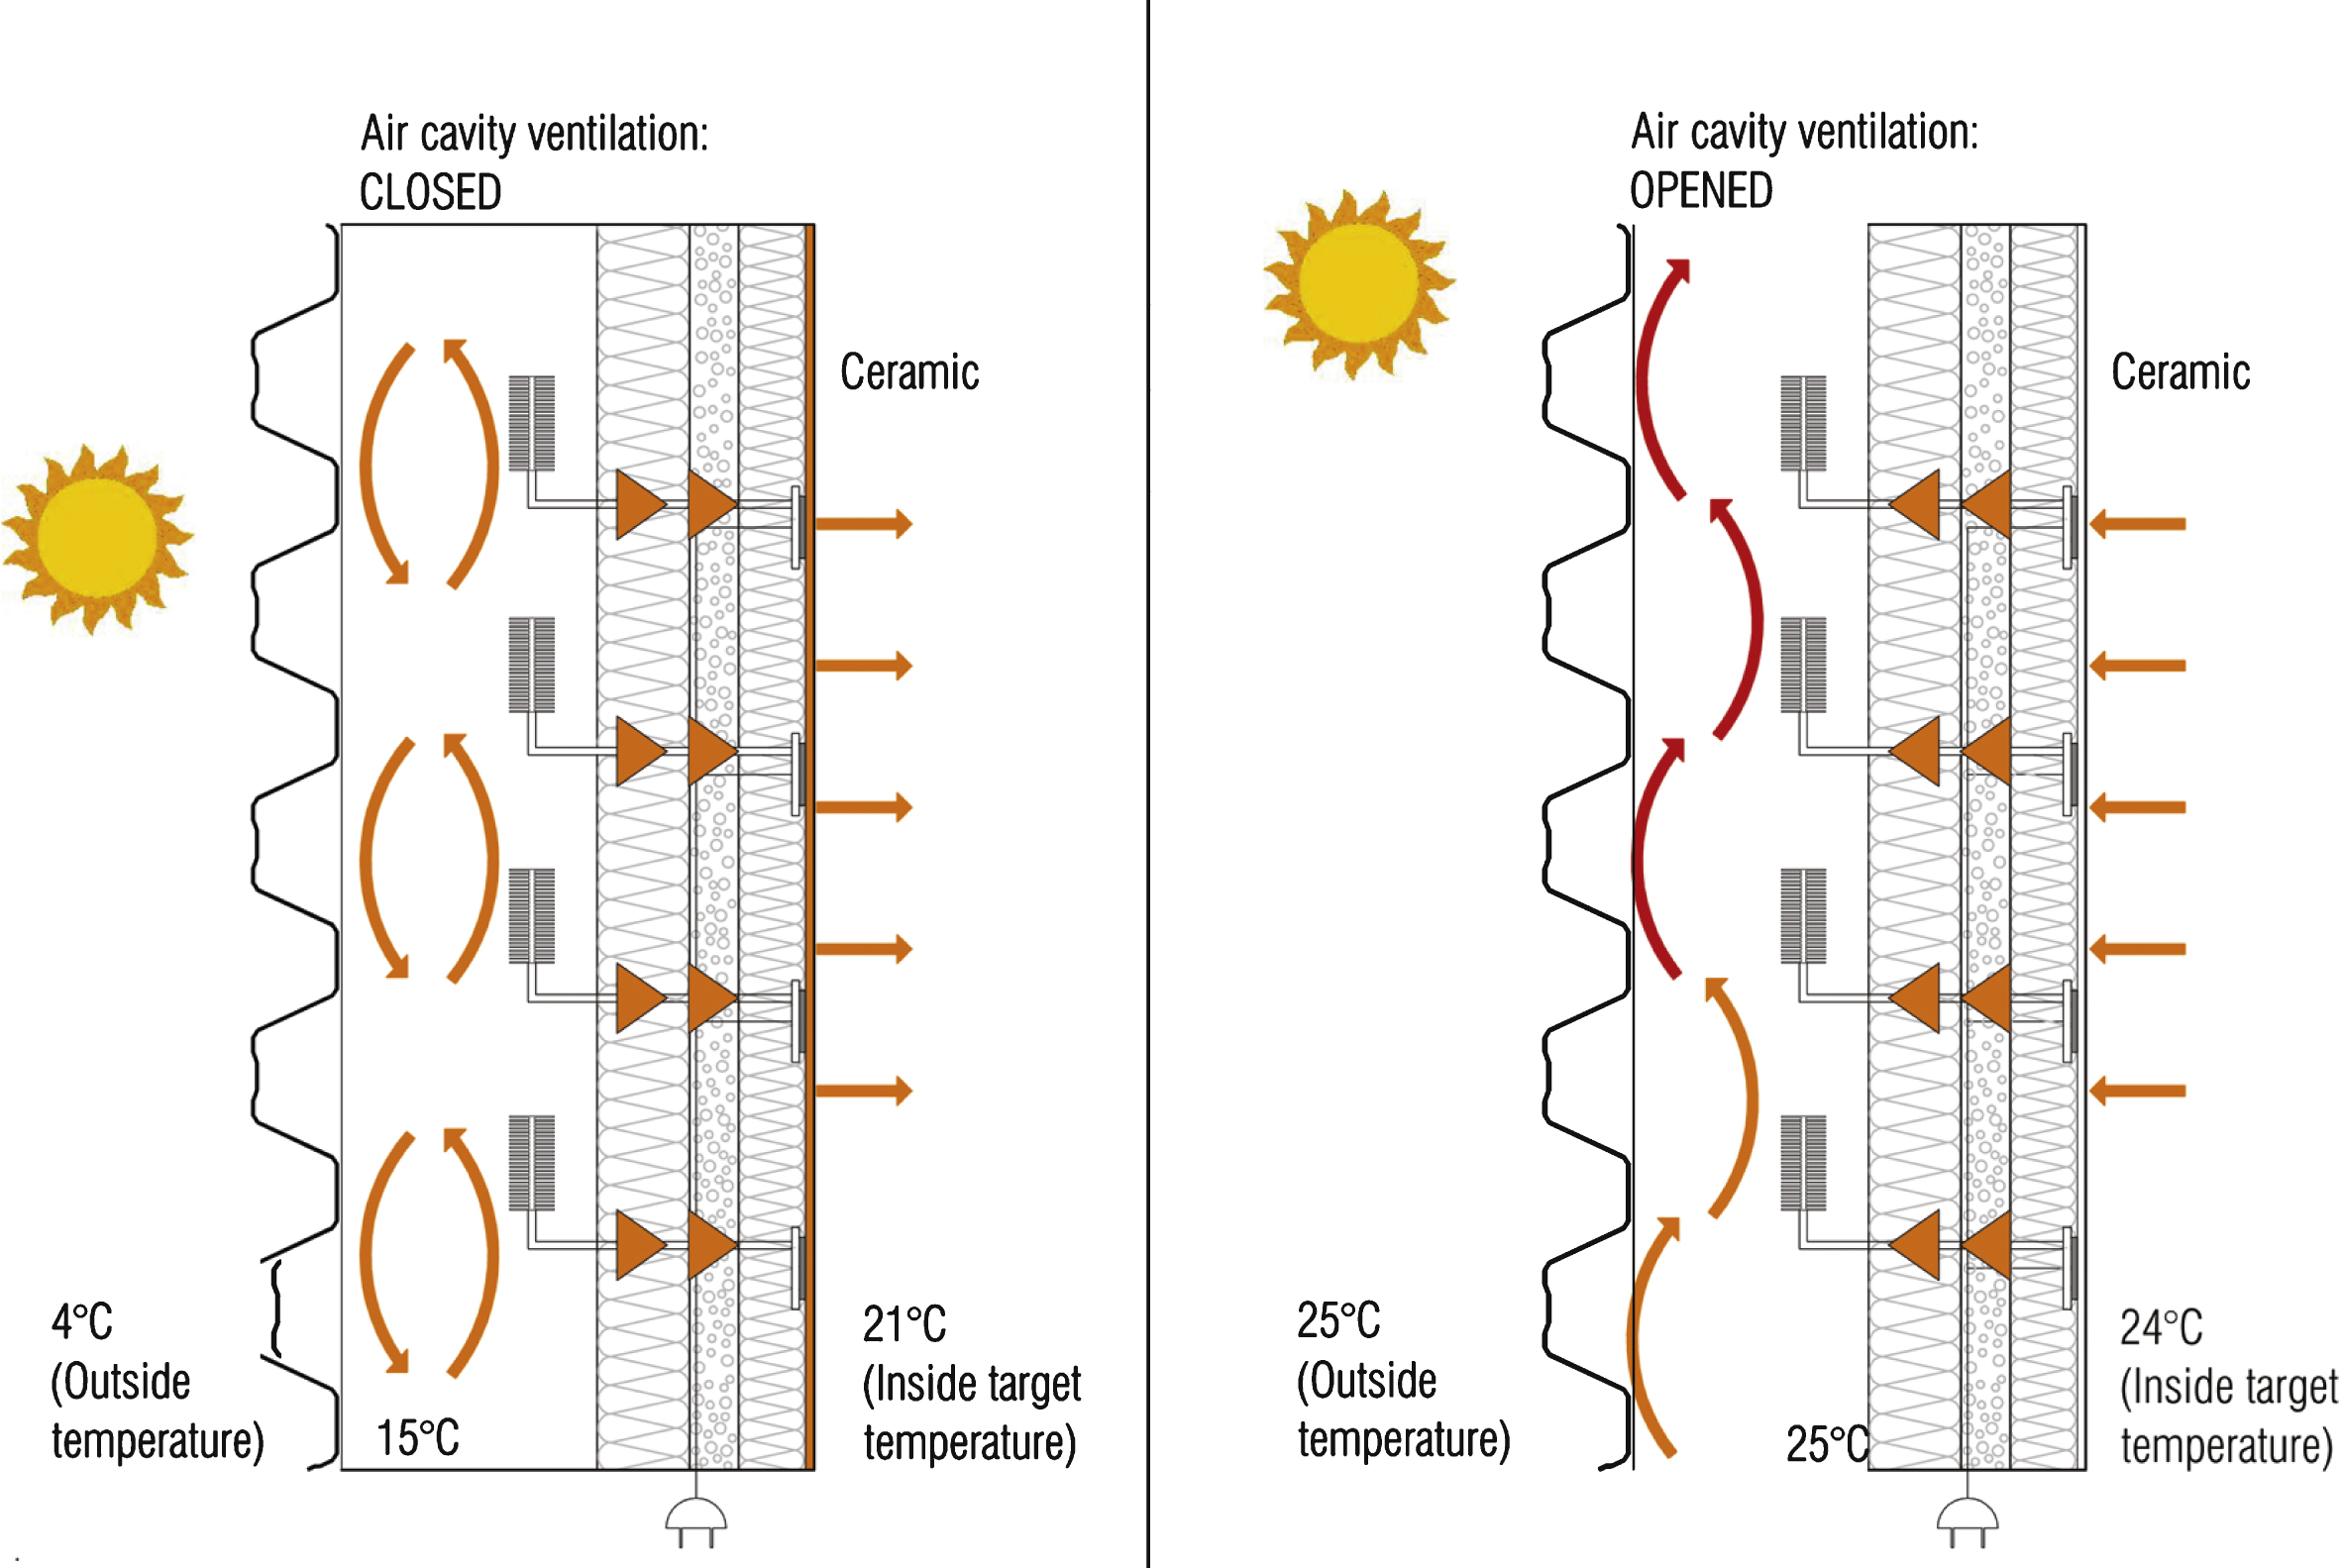 Energy performance during cold season (left) vs. energy performance during hot seasons (right).